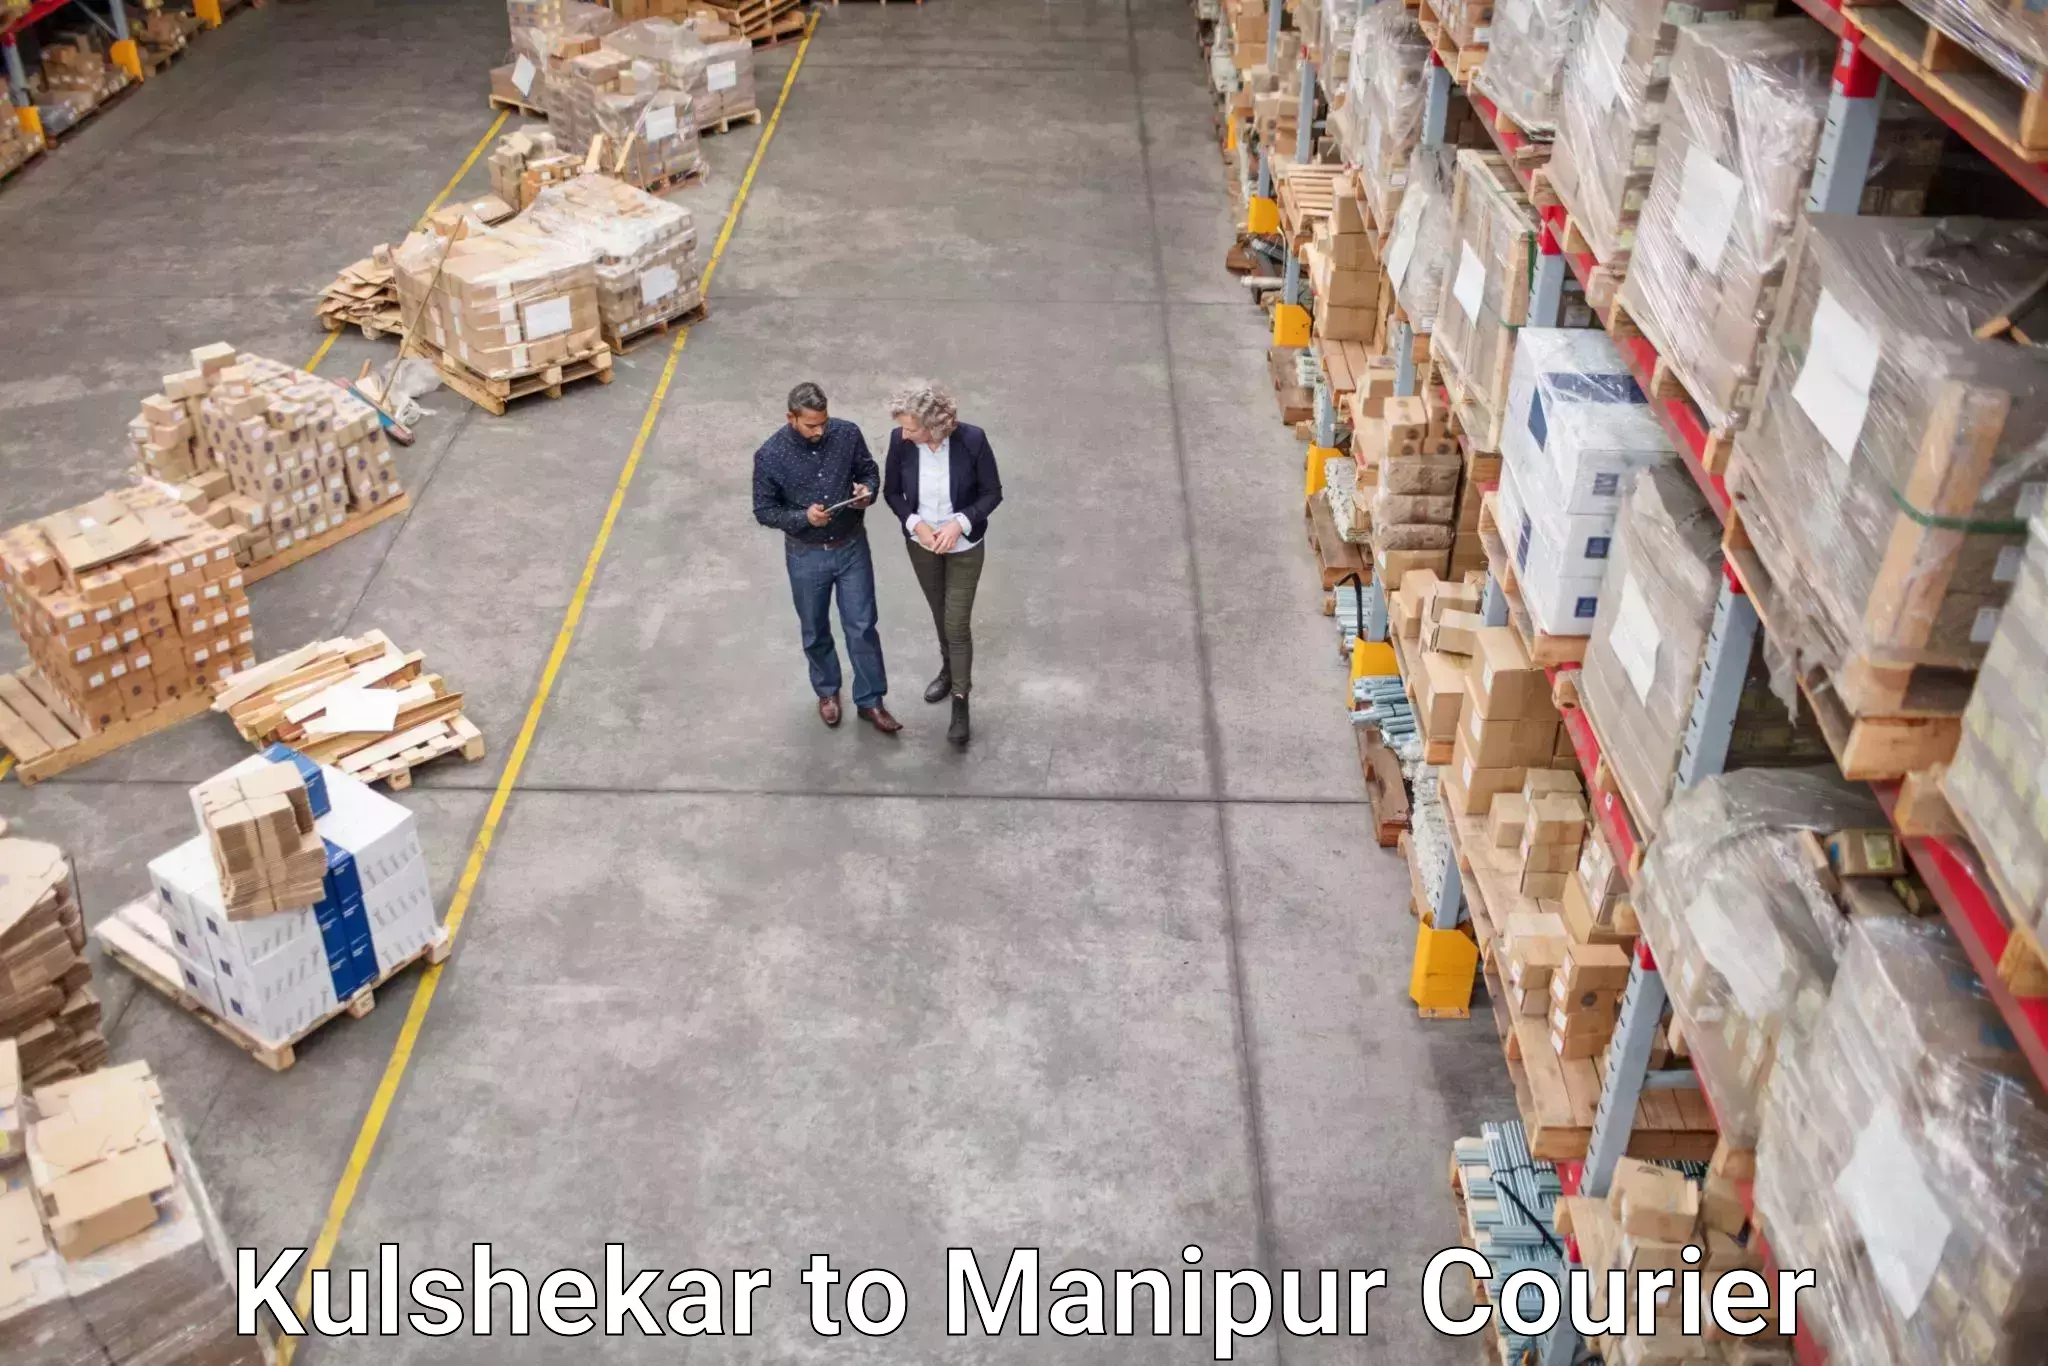 Courier service partnerships Kulshekar to Imphal